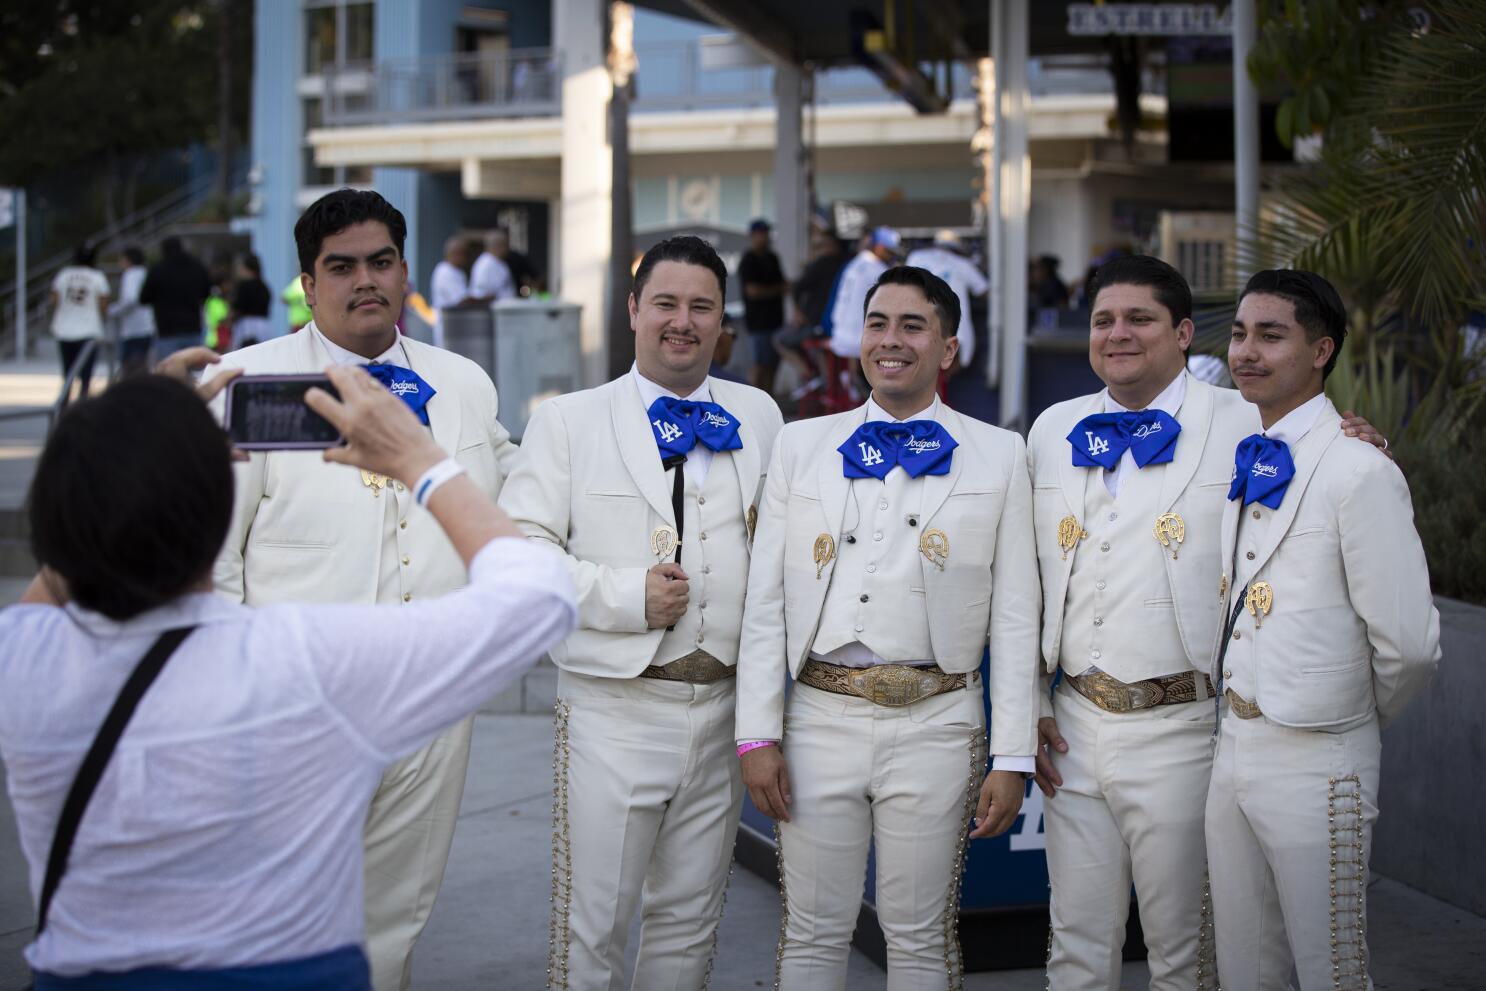 Dodgers dress up in costumes for final road trip - True Blue LA